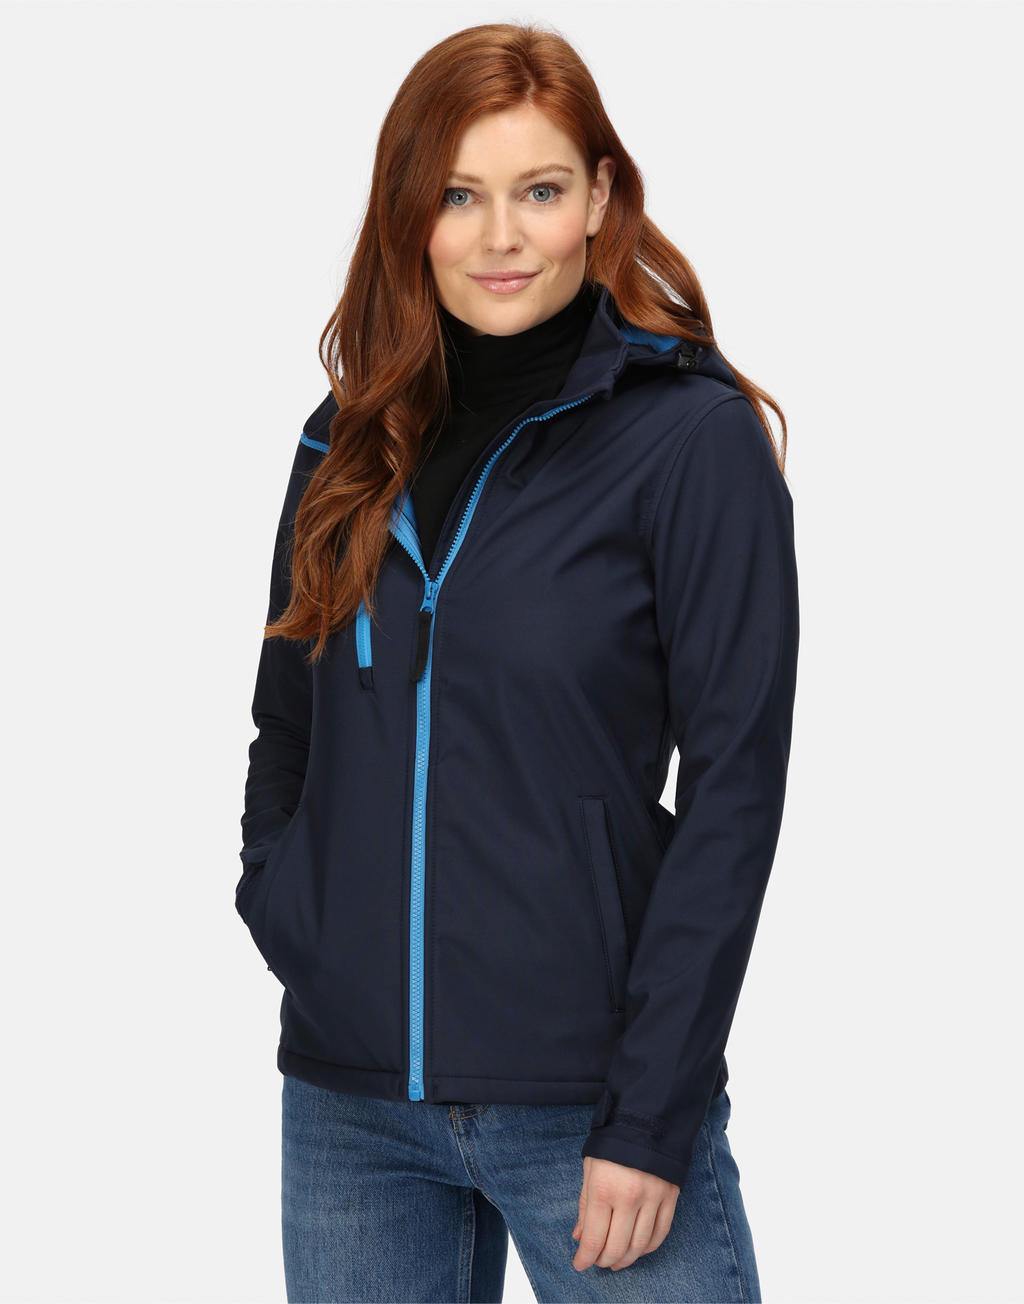 Women's Venturer 3-Layer Hooded Softshell Jacket